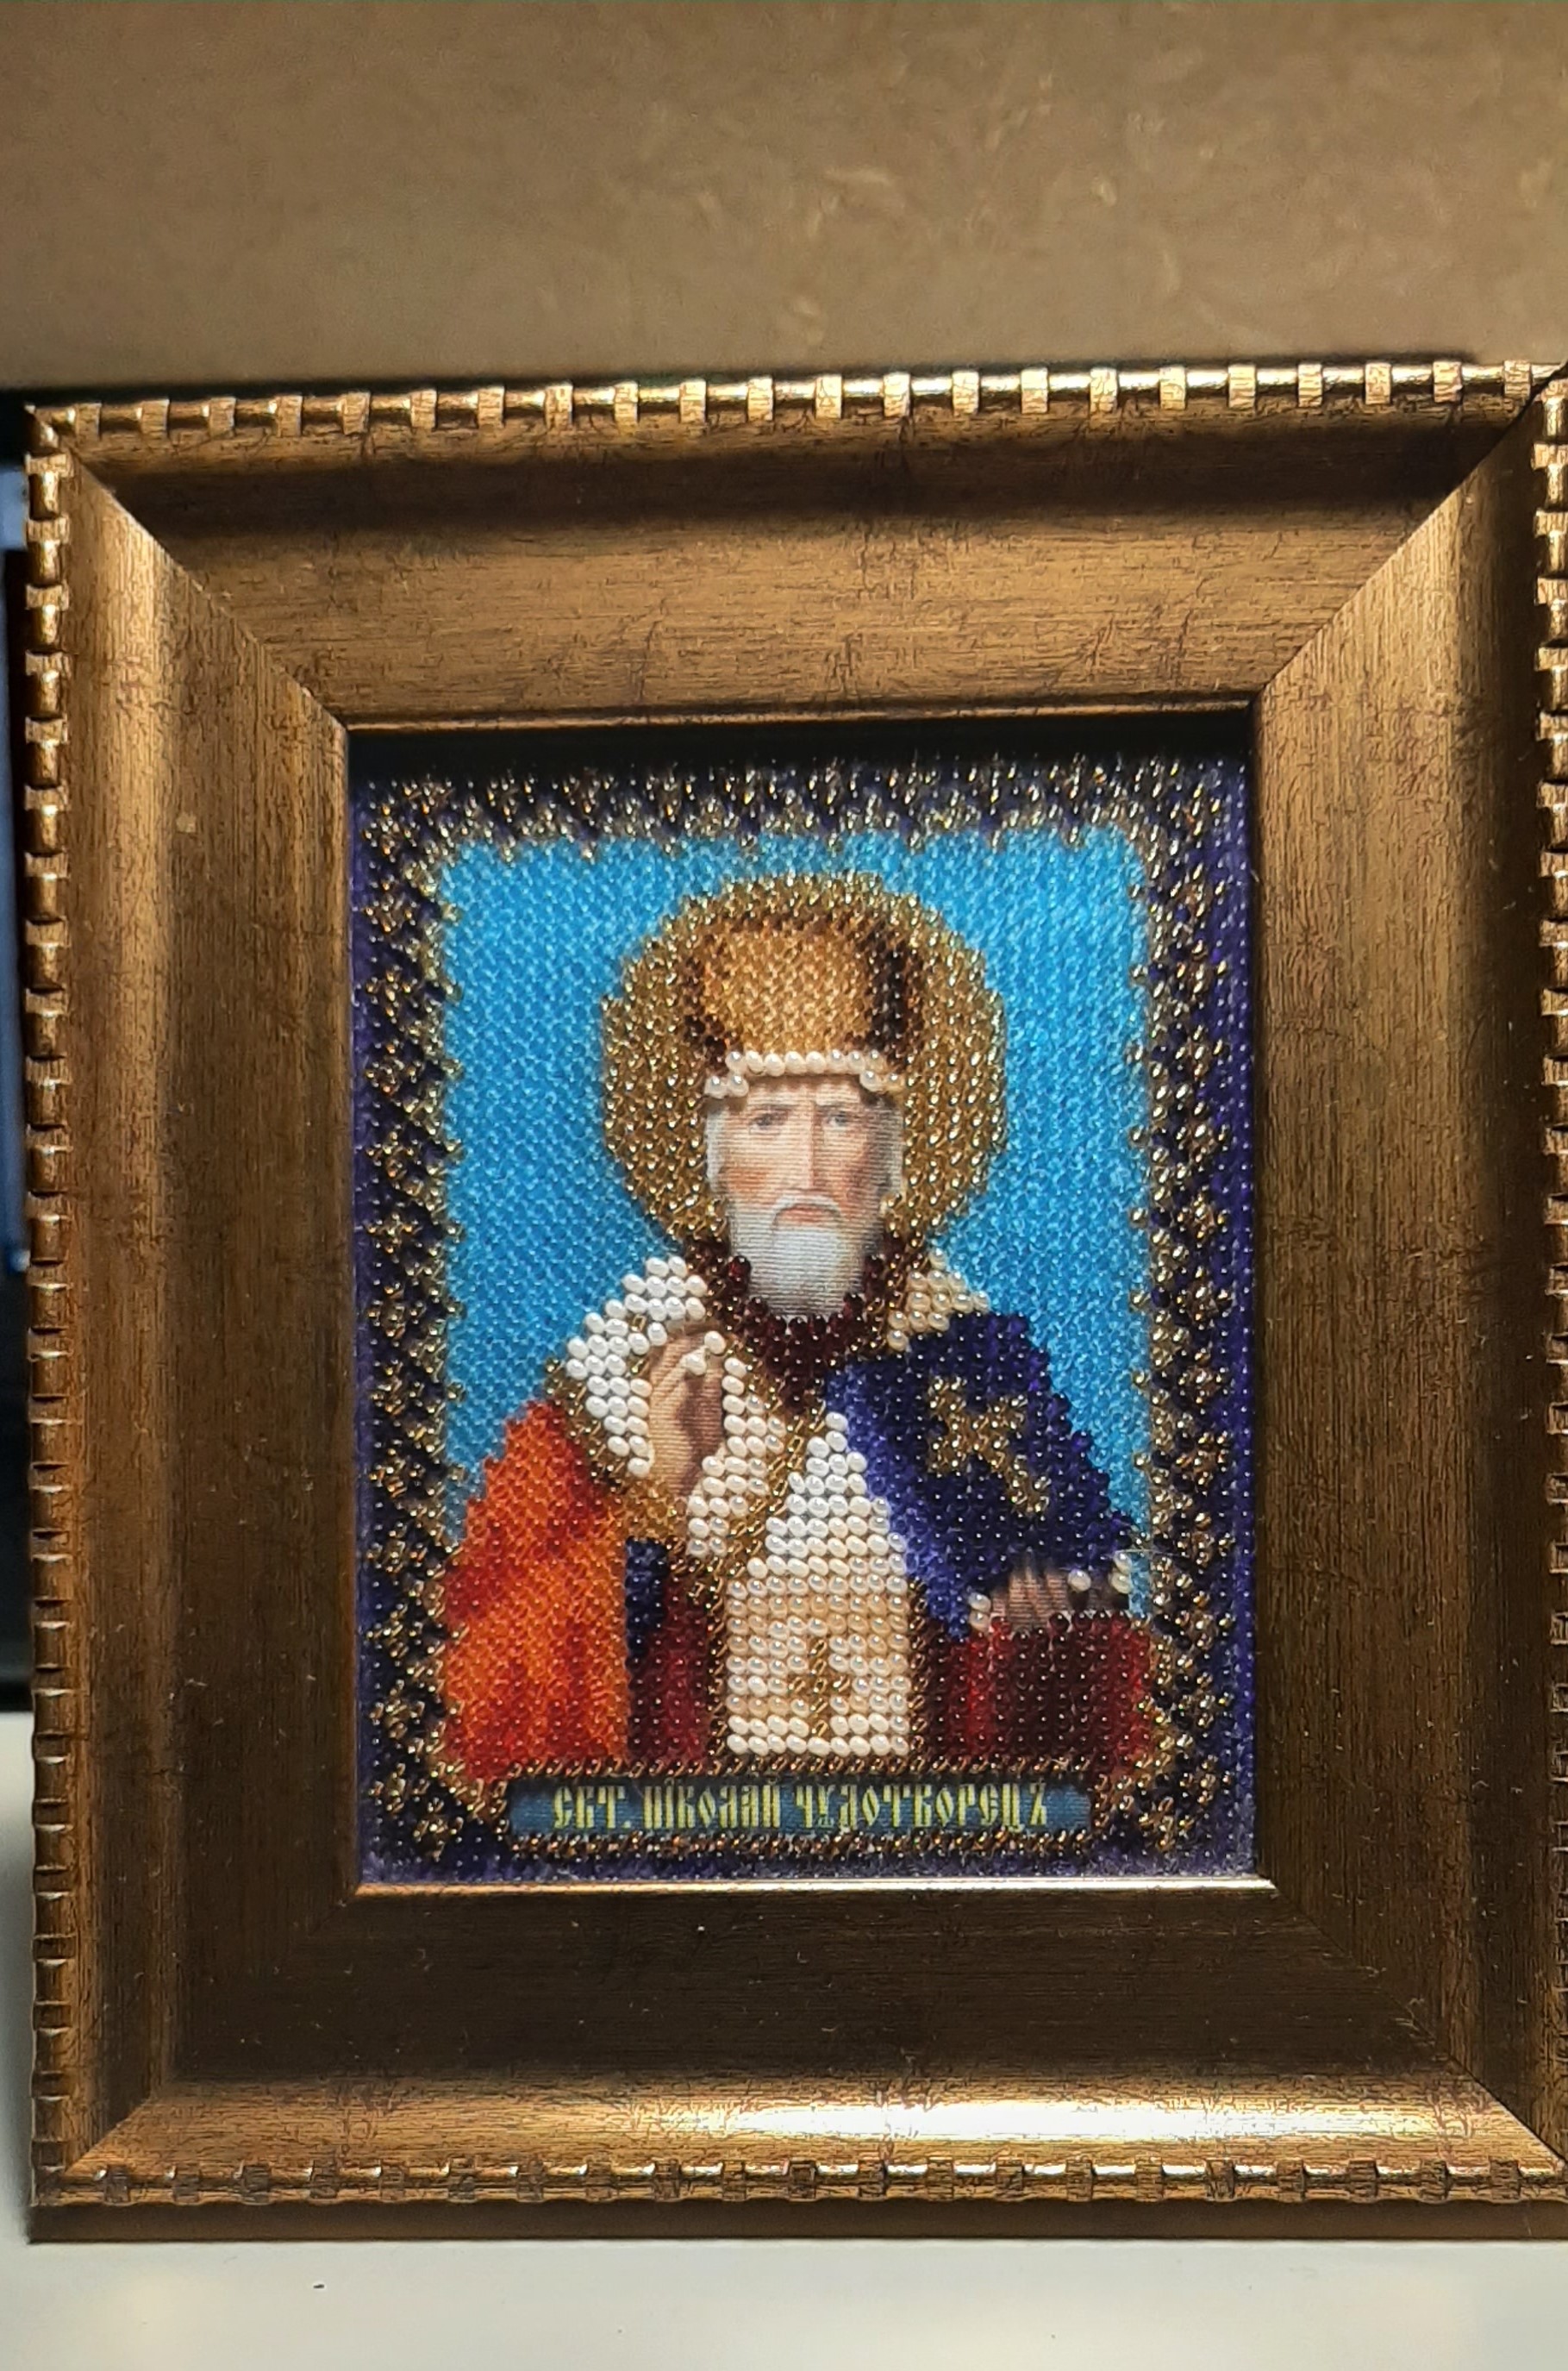 CM-1338 "Икона Святителя Николая Чудотворца"